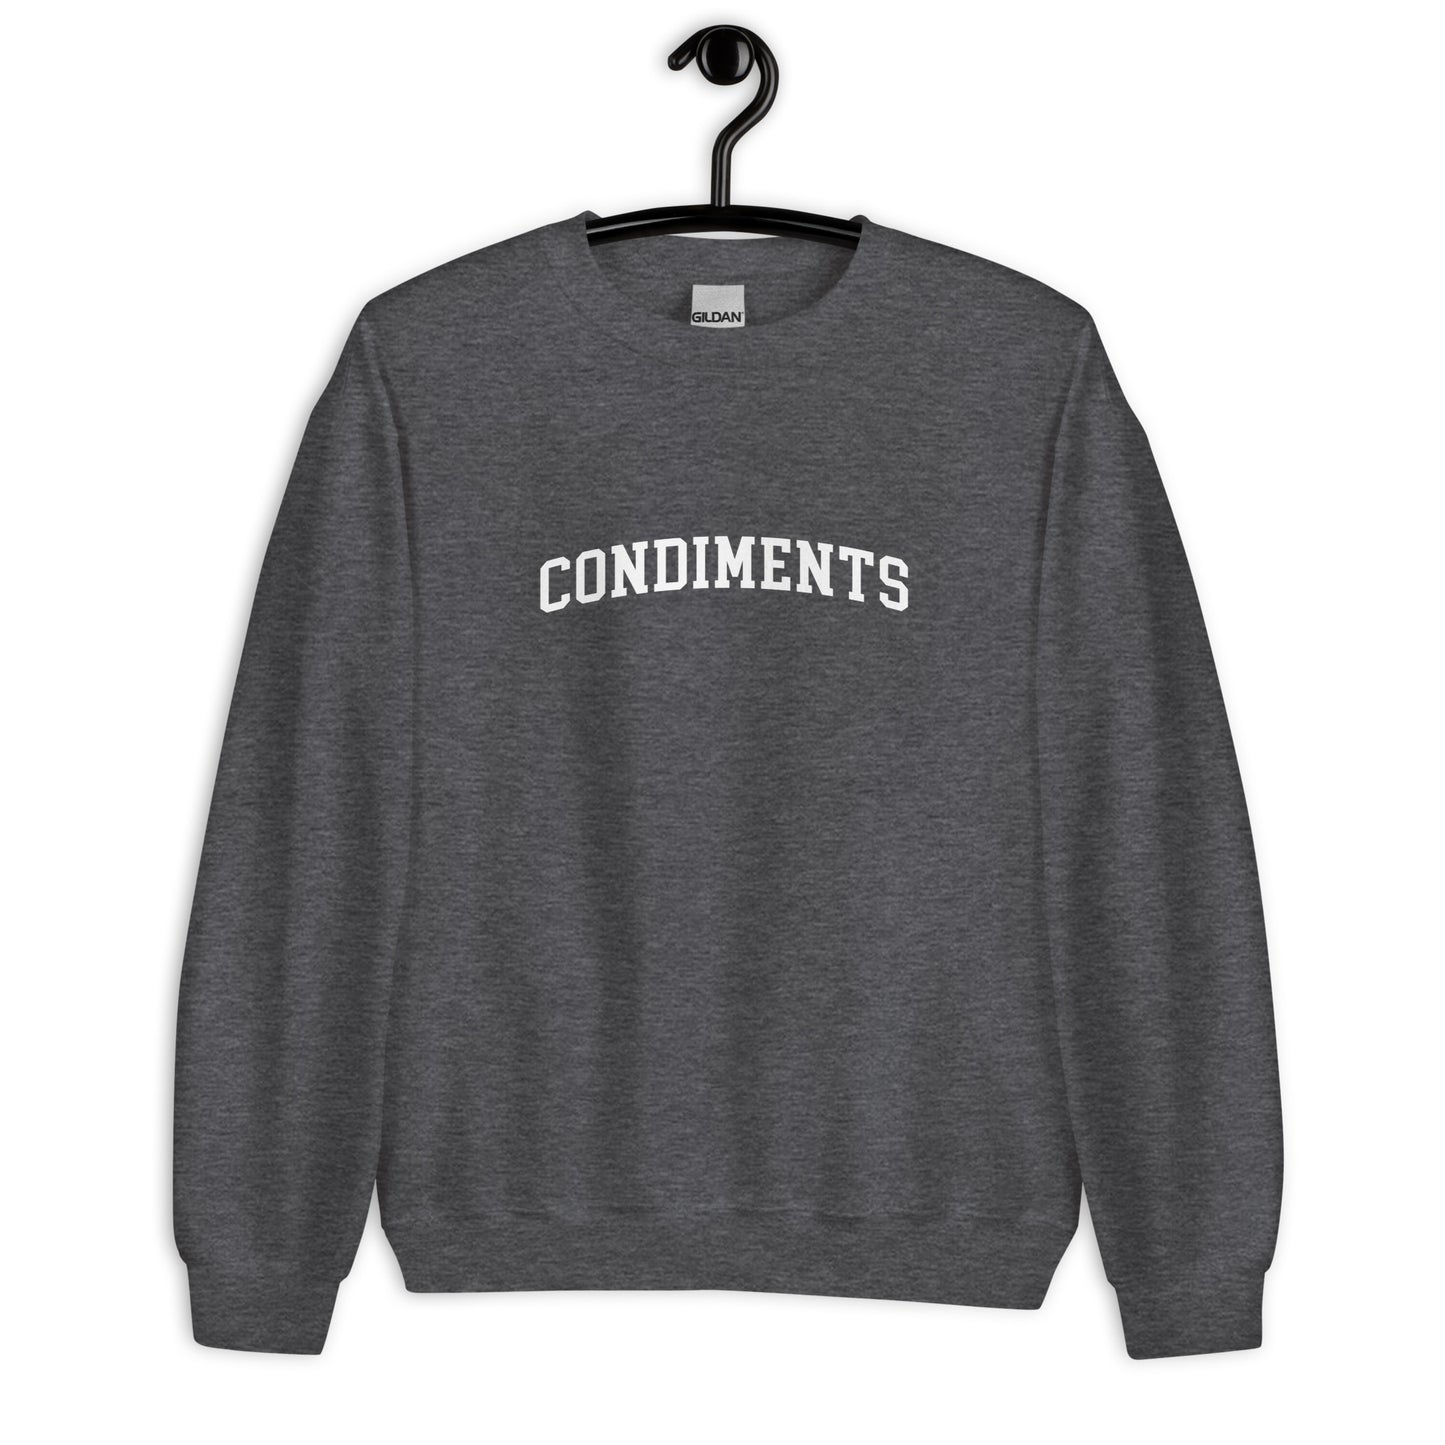 Condiments Sweatshirt - Arched Font